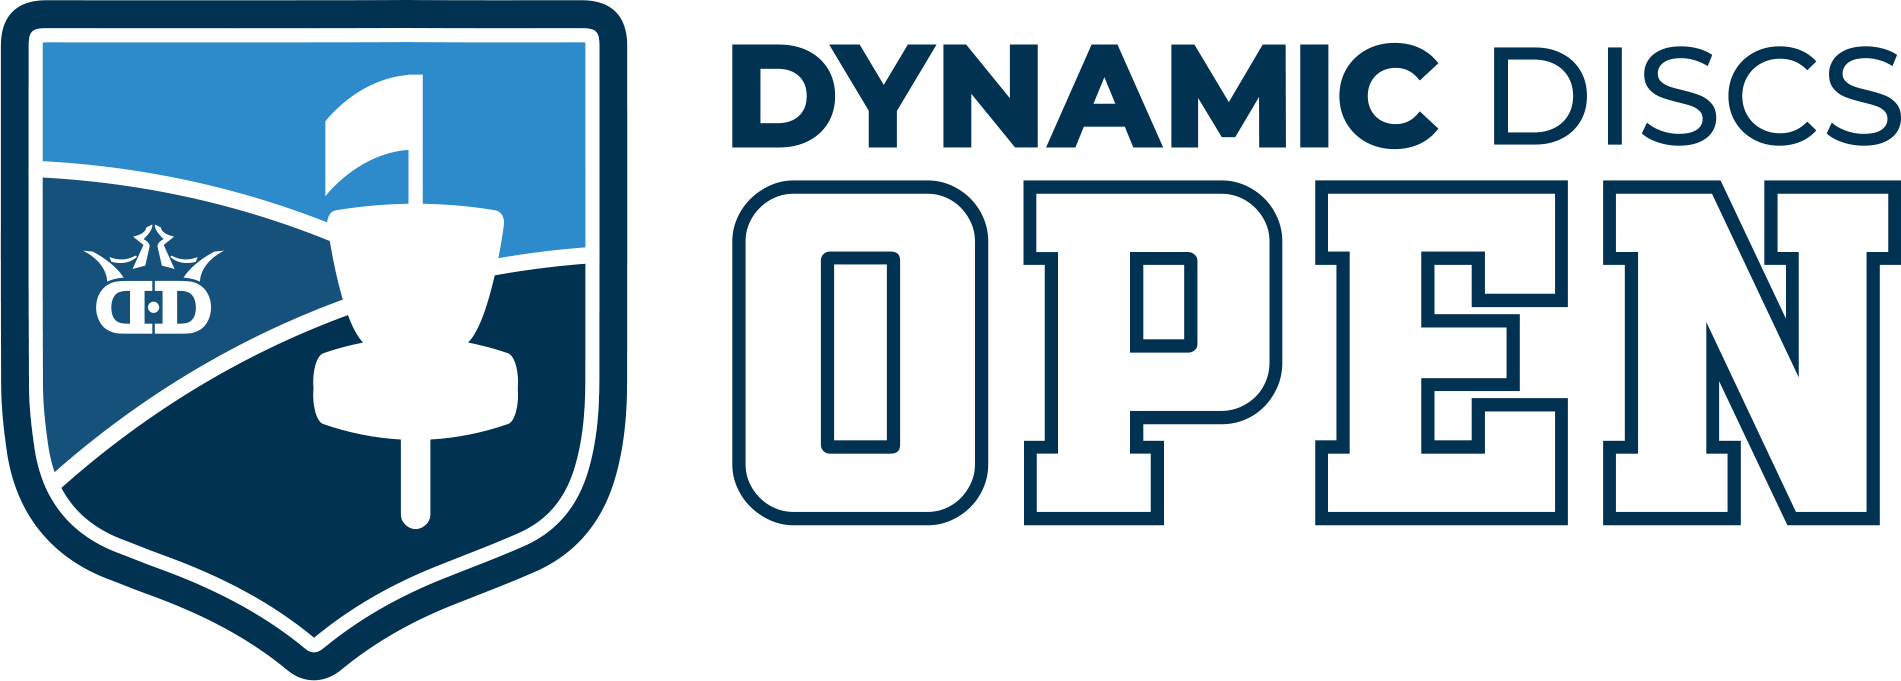 Dynamic Discs Open National Tour Professional Disc Golf Association